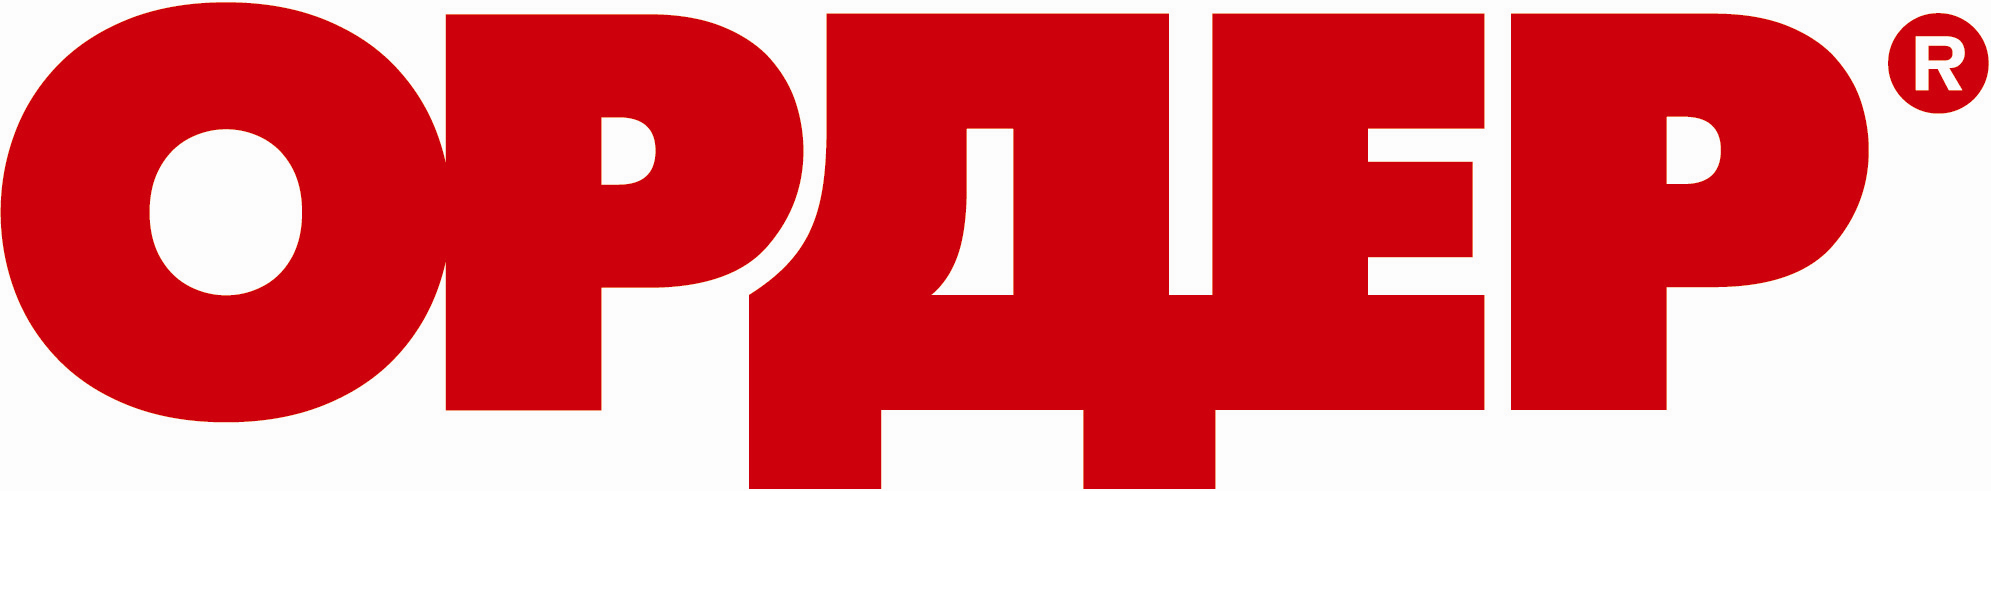 Ордер магазин. Ордер лого. Магазин ордер в Нижнем Новгороде. Магазин ордер логотип.